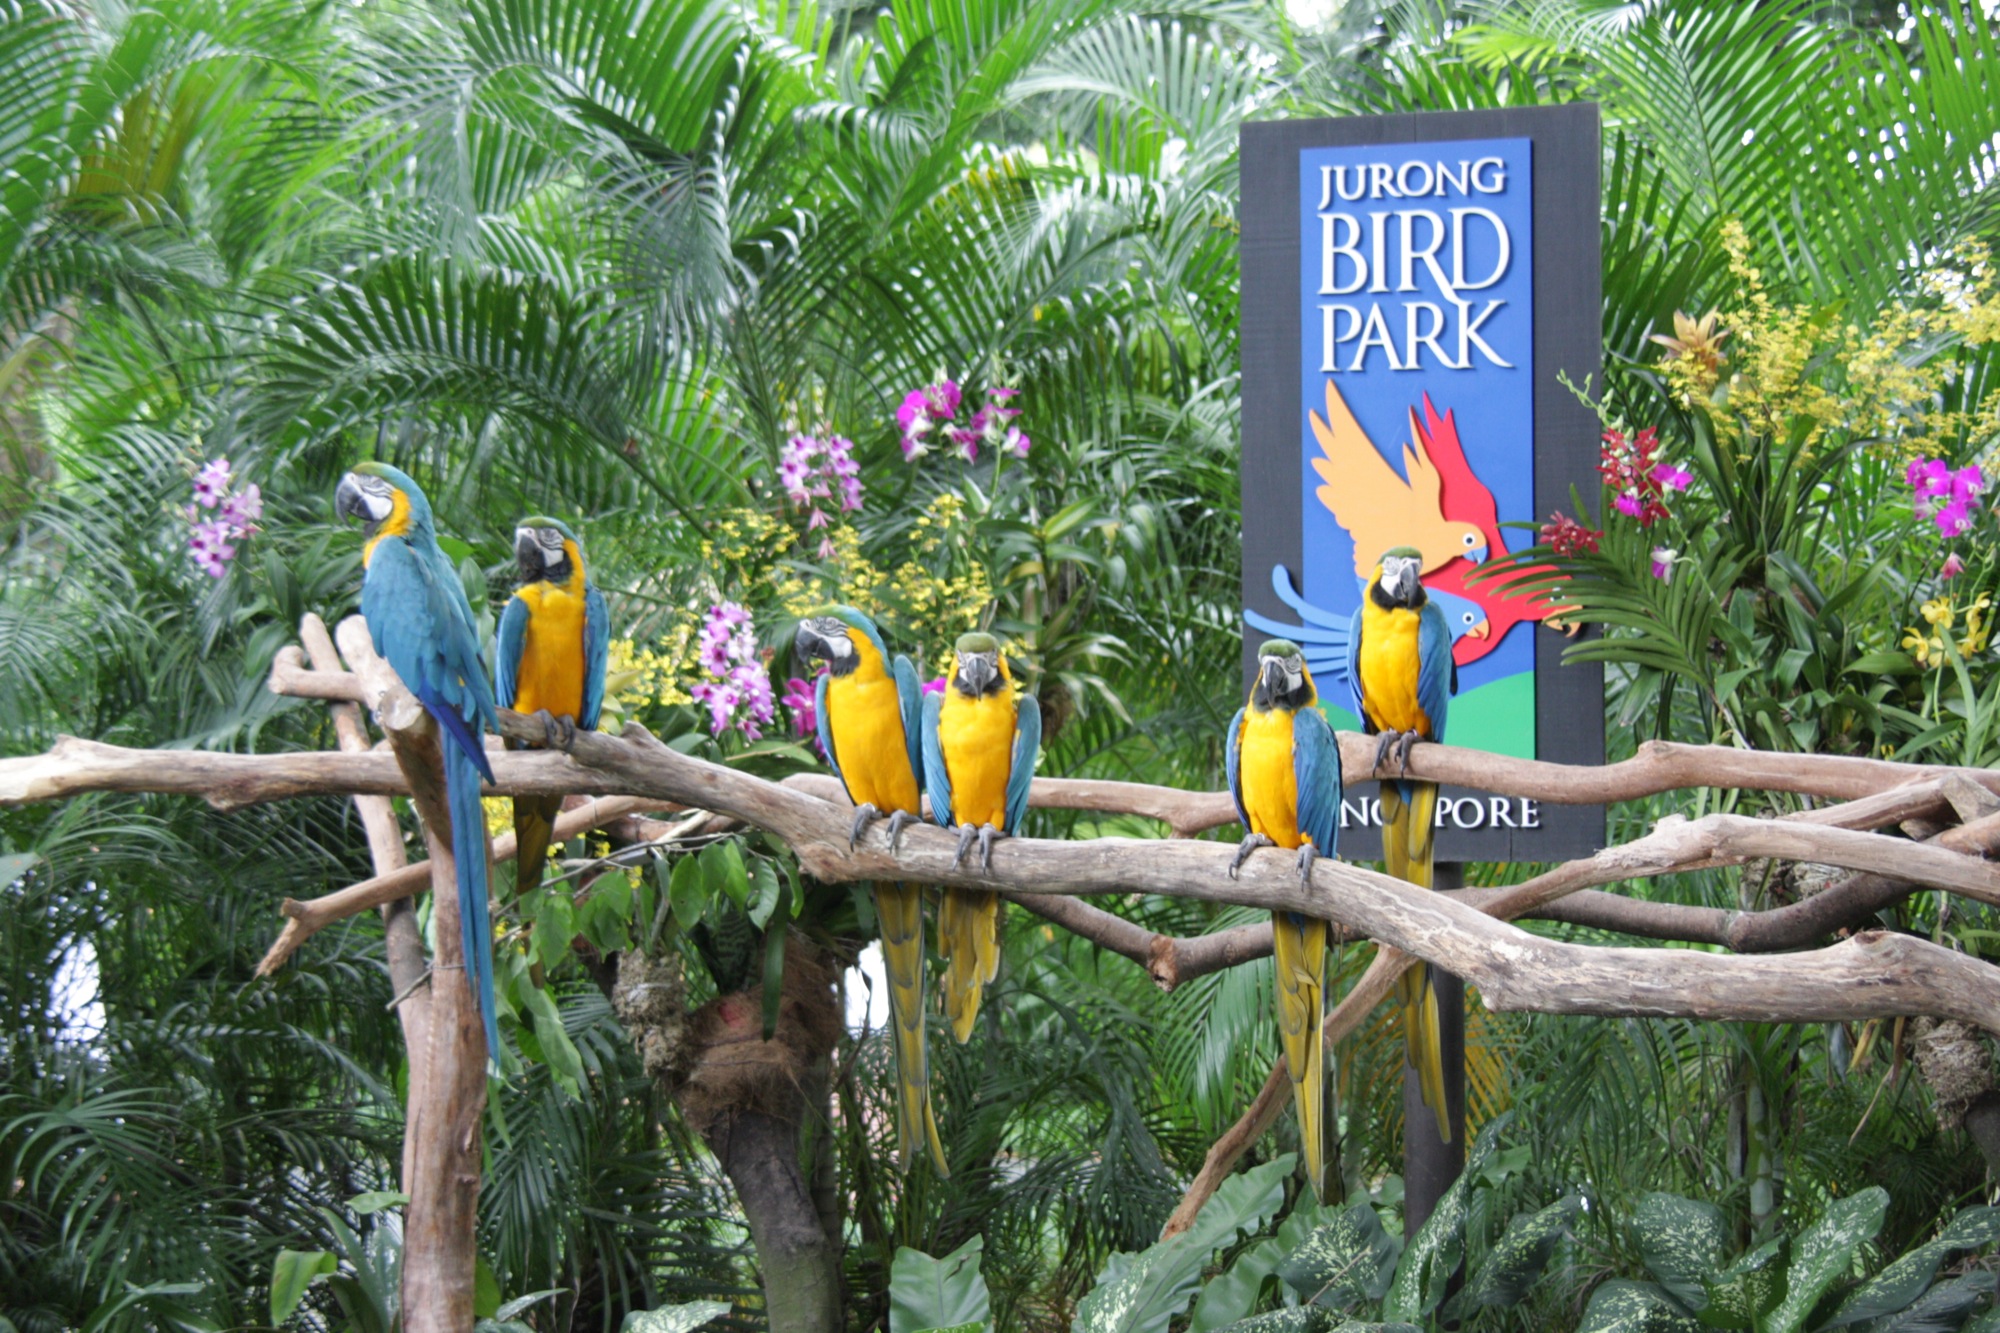 Vườn chim Jurong - Jurong Bird Park - Singapore - Singapore